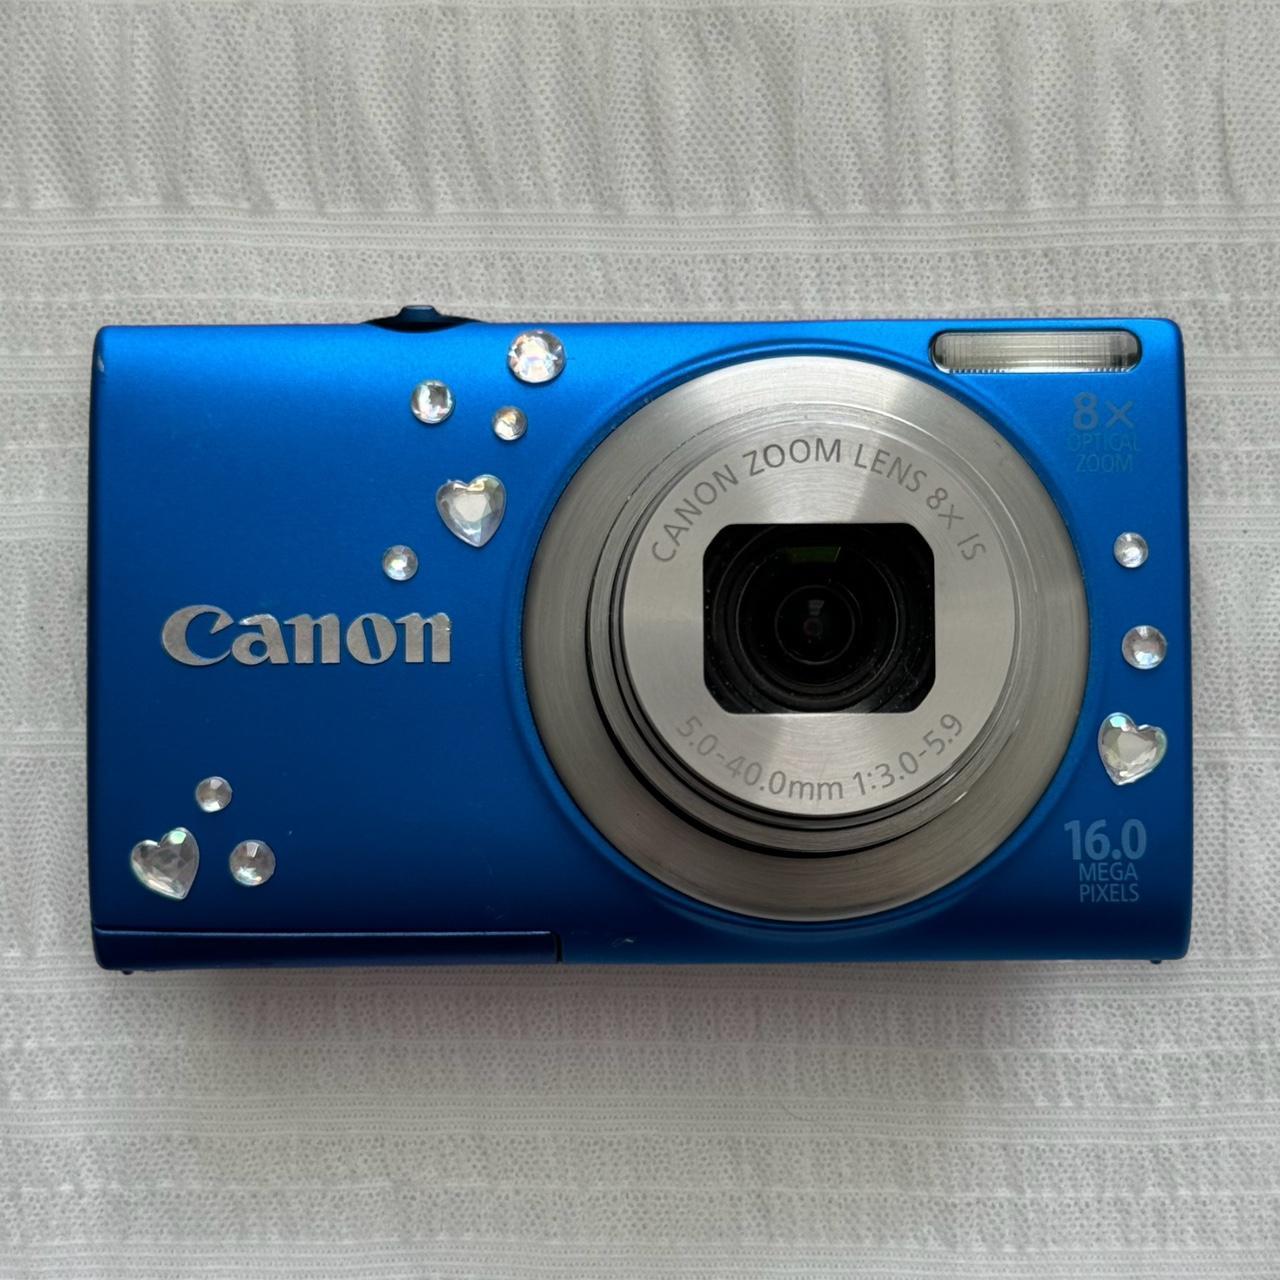 Canon PowerShot A2300 Digital Camera Review